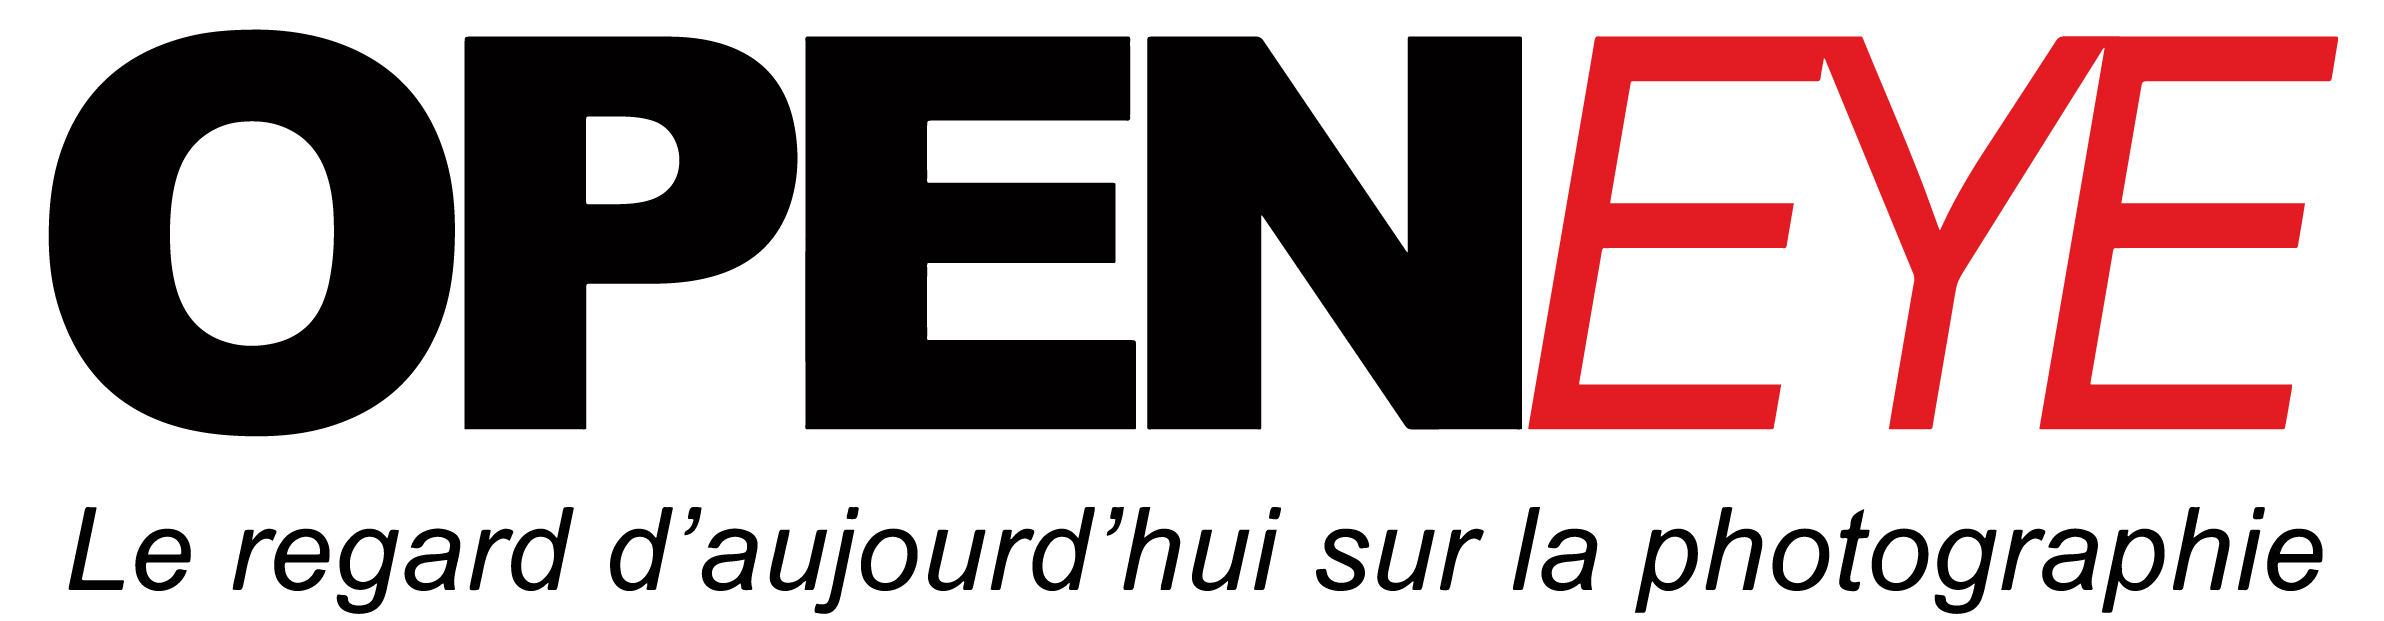 Logo OPENEYE Grand Modèle 2